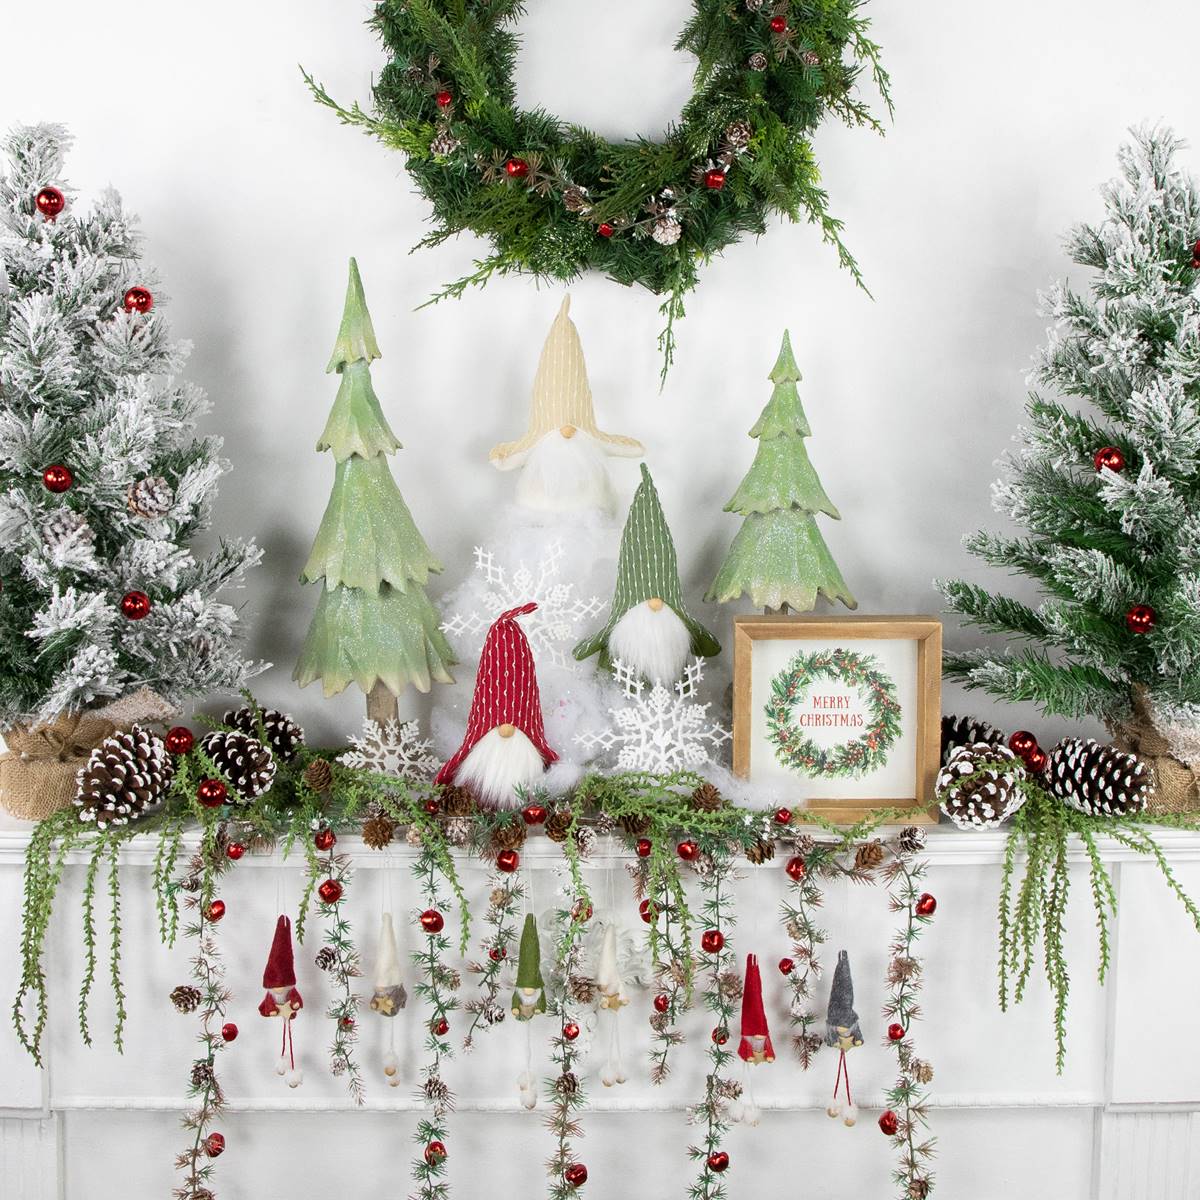 Northlight Seasonal Gnomes Christmas Ornaments - Set Of 6